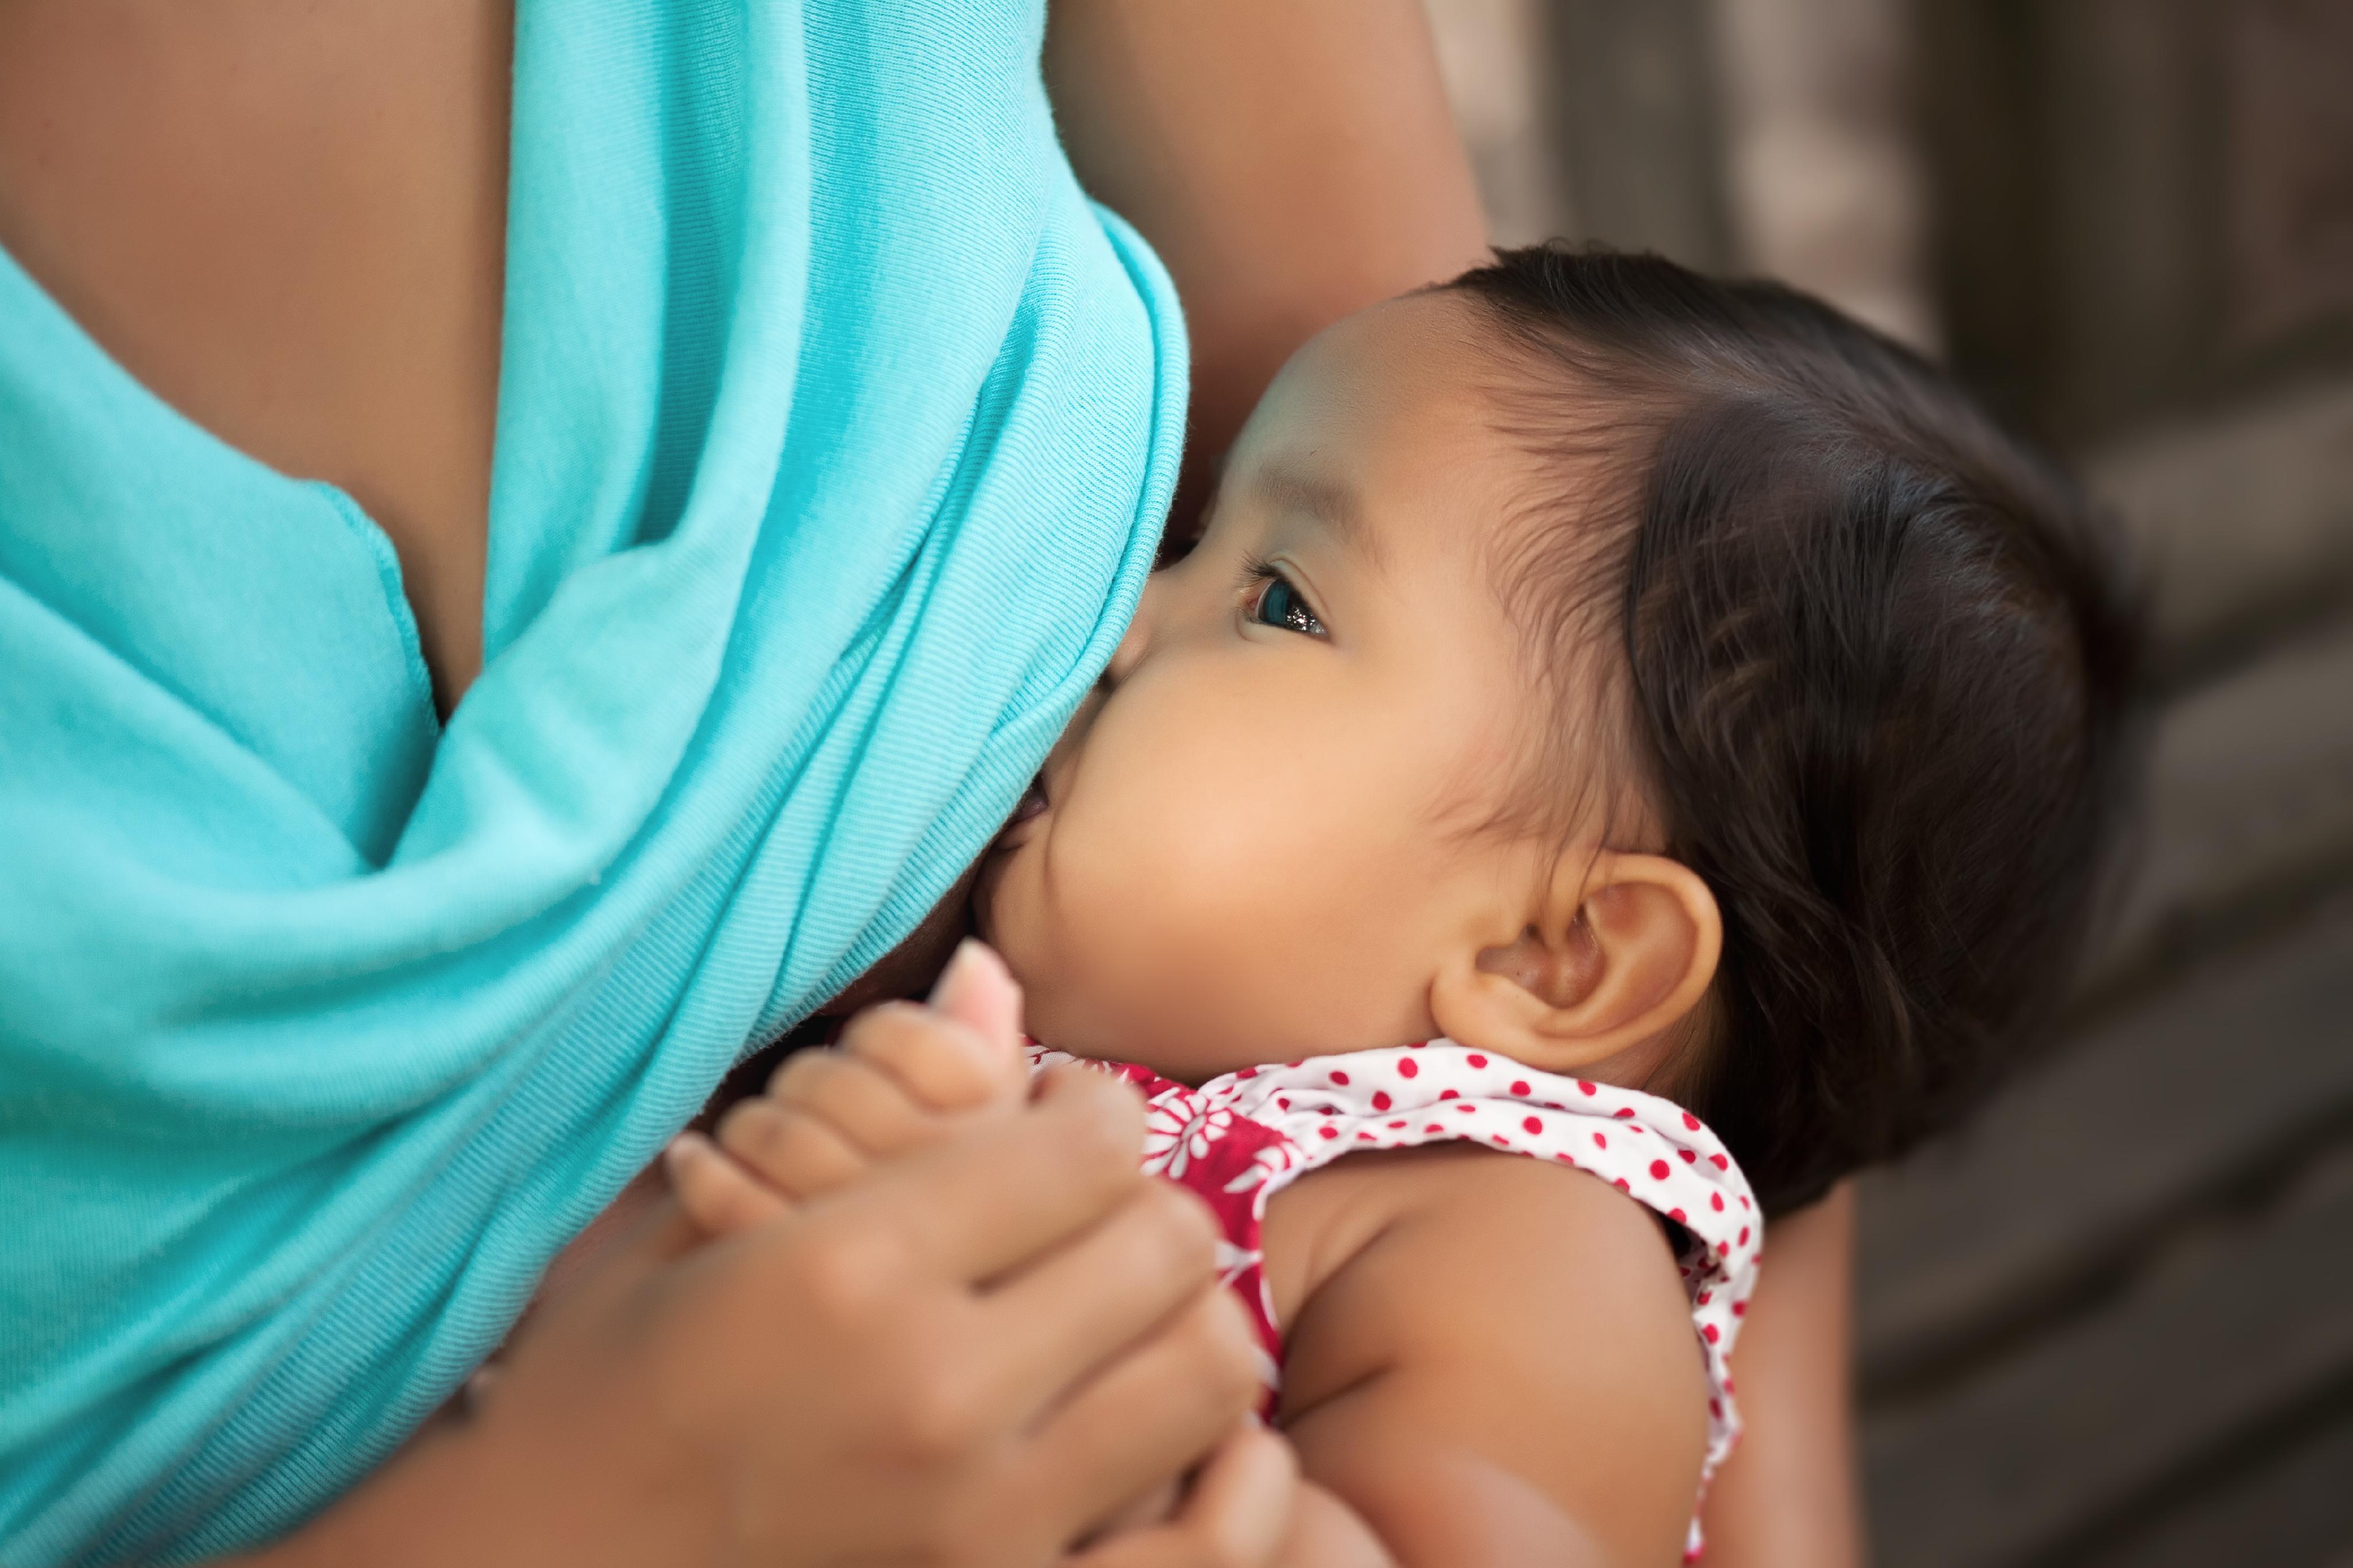 Breastfeeding, Benefits of Breastfeeding